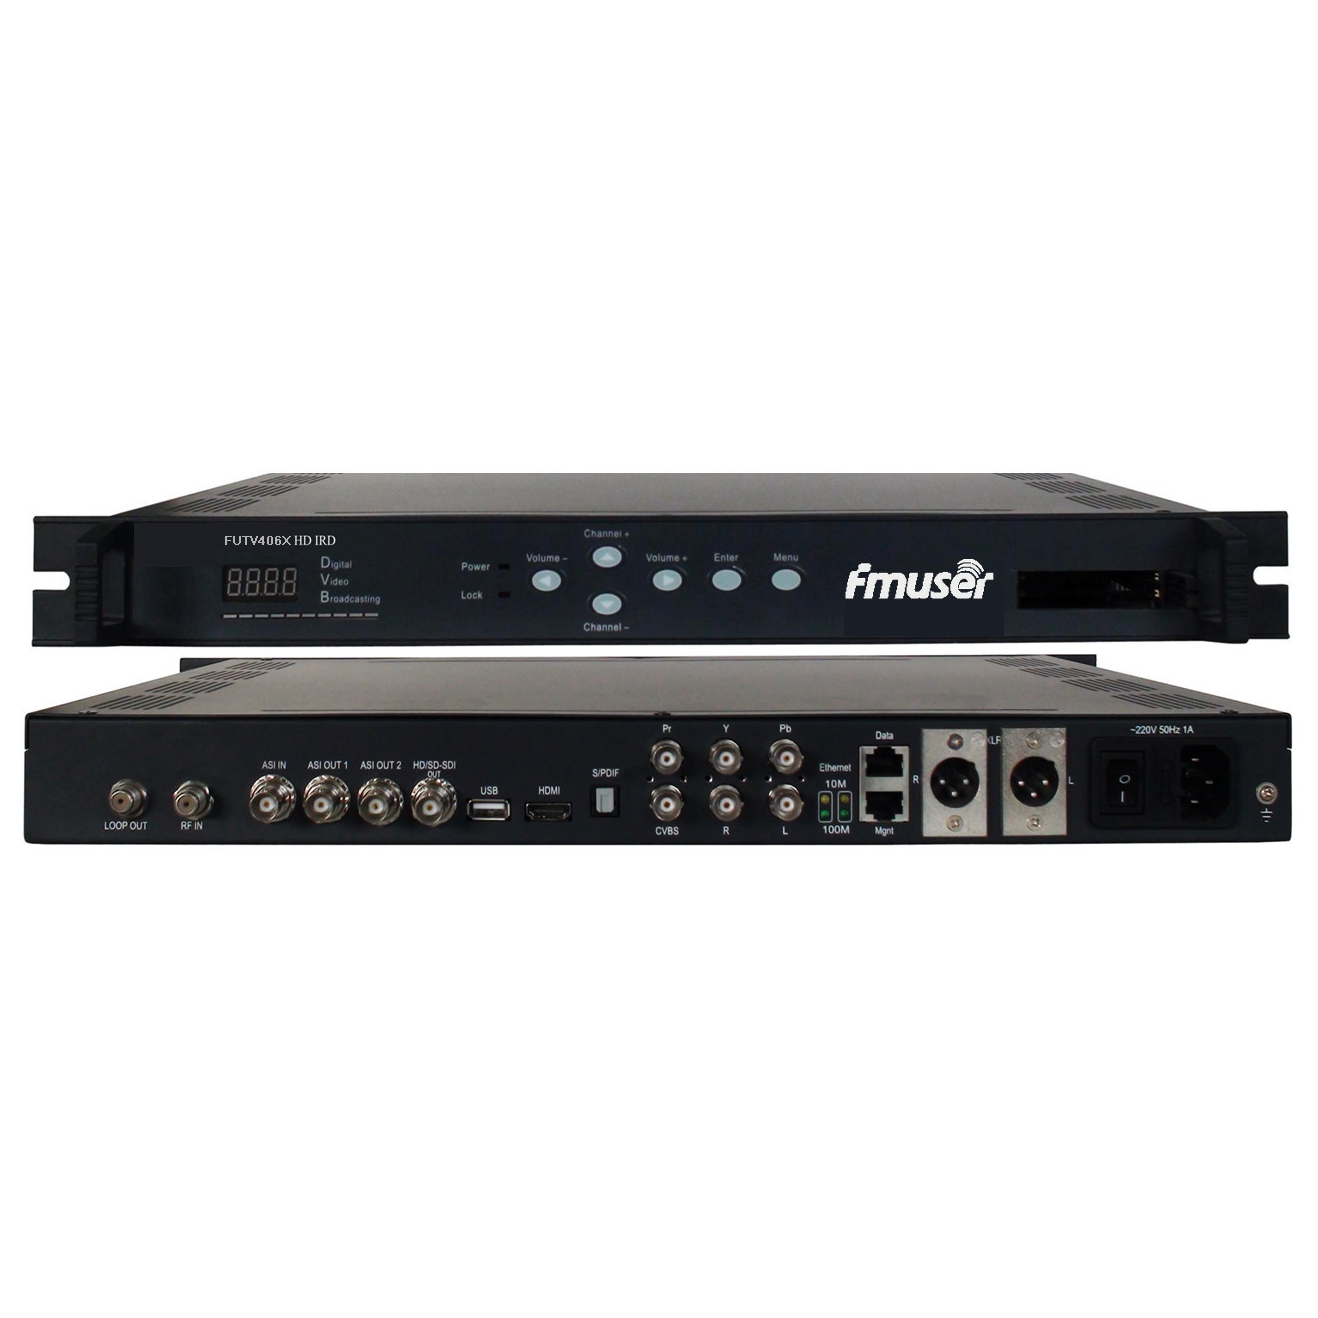 FMUSER FUTV406X HD IRD (1 DVB-S / S2 / T / C, ISDB-T de RF de entrada, 1 ASI IP en, salida 2 1 ASI IP, HDMI SDI CVBS XLR Out) con MUX y BISS